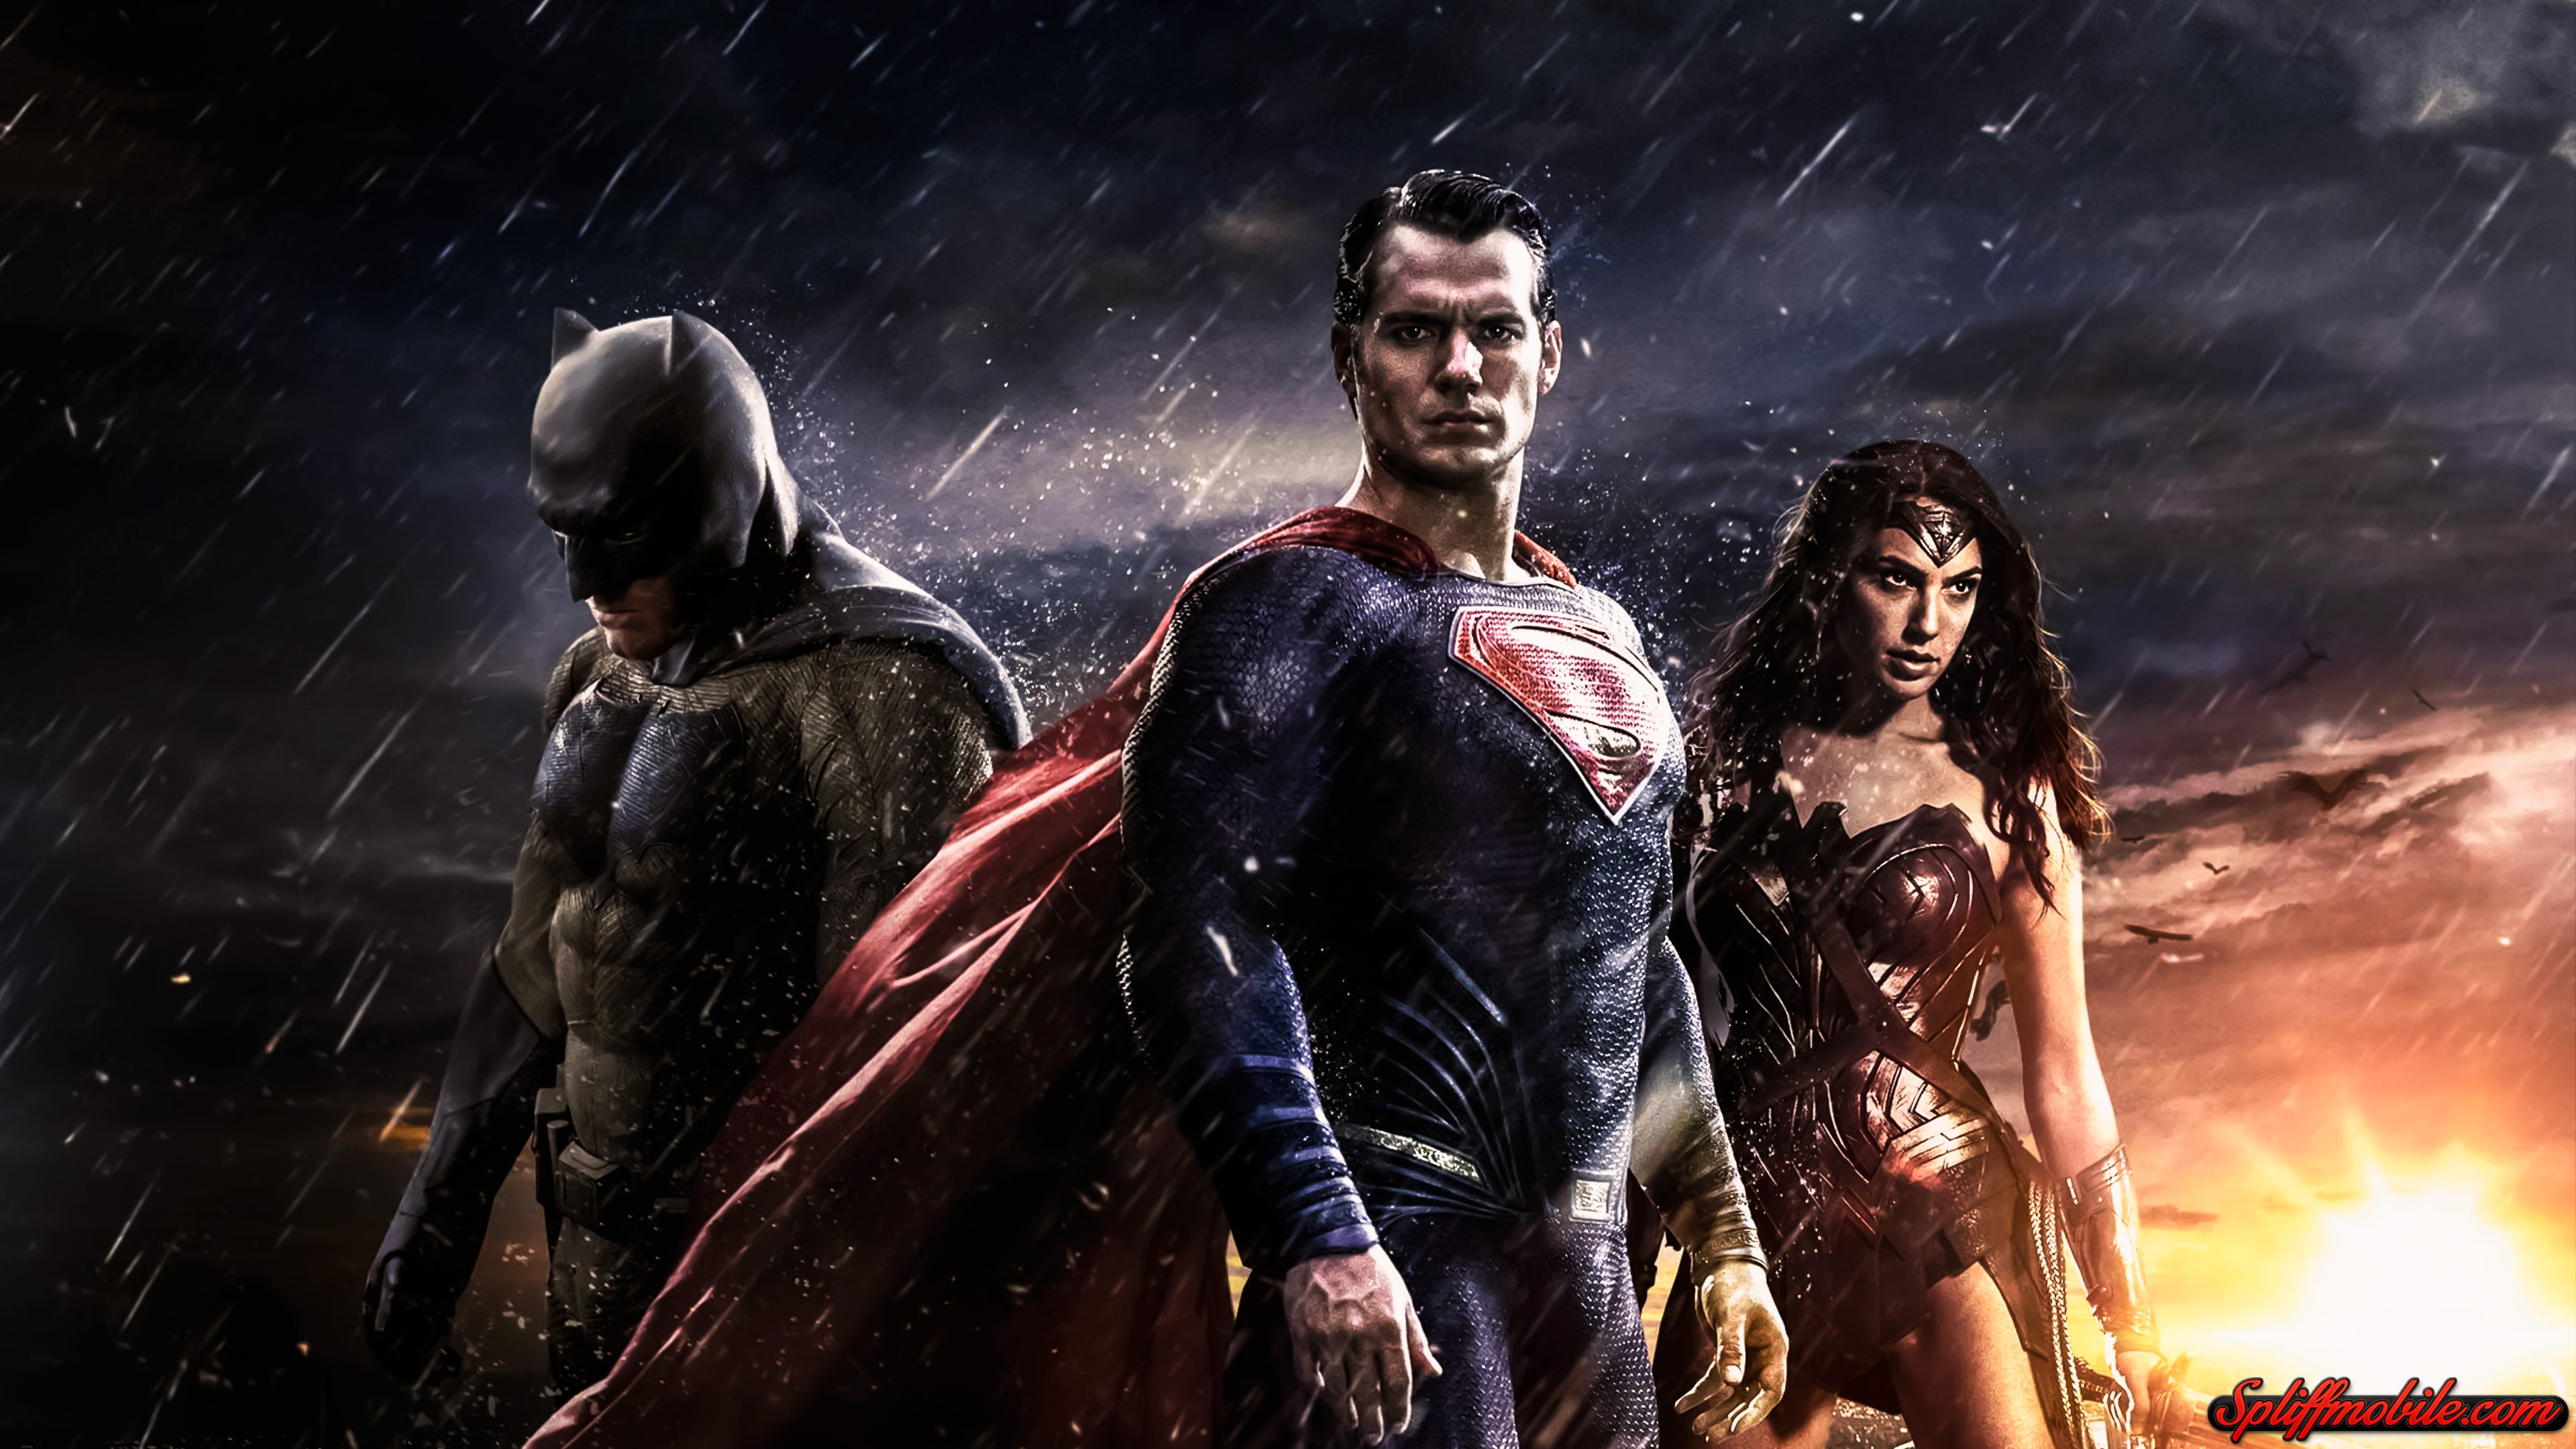 Batman Vs Superman Wallpaper Background Image